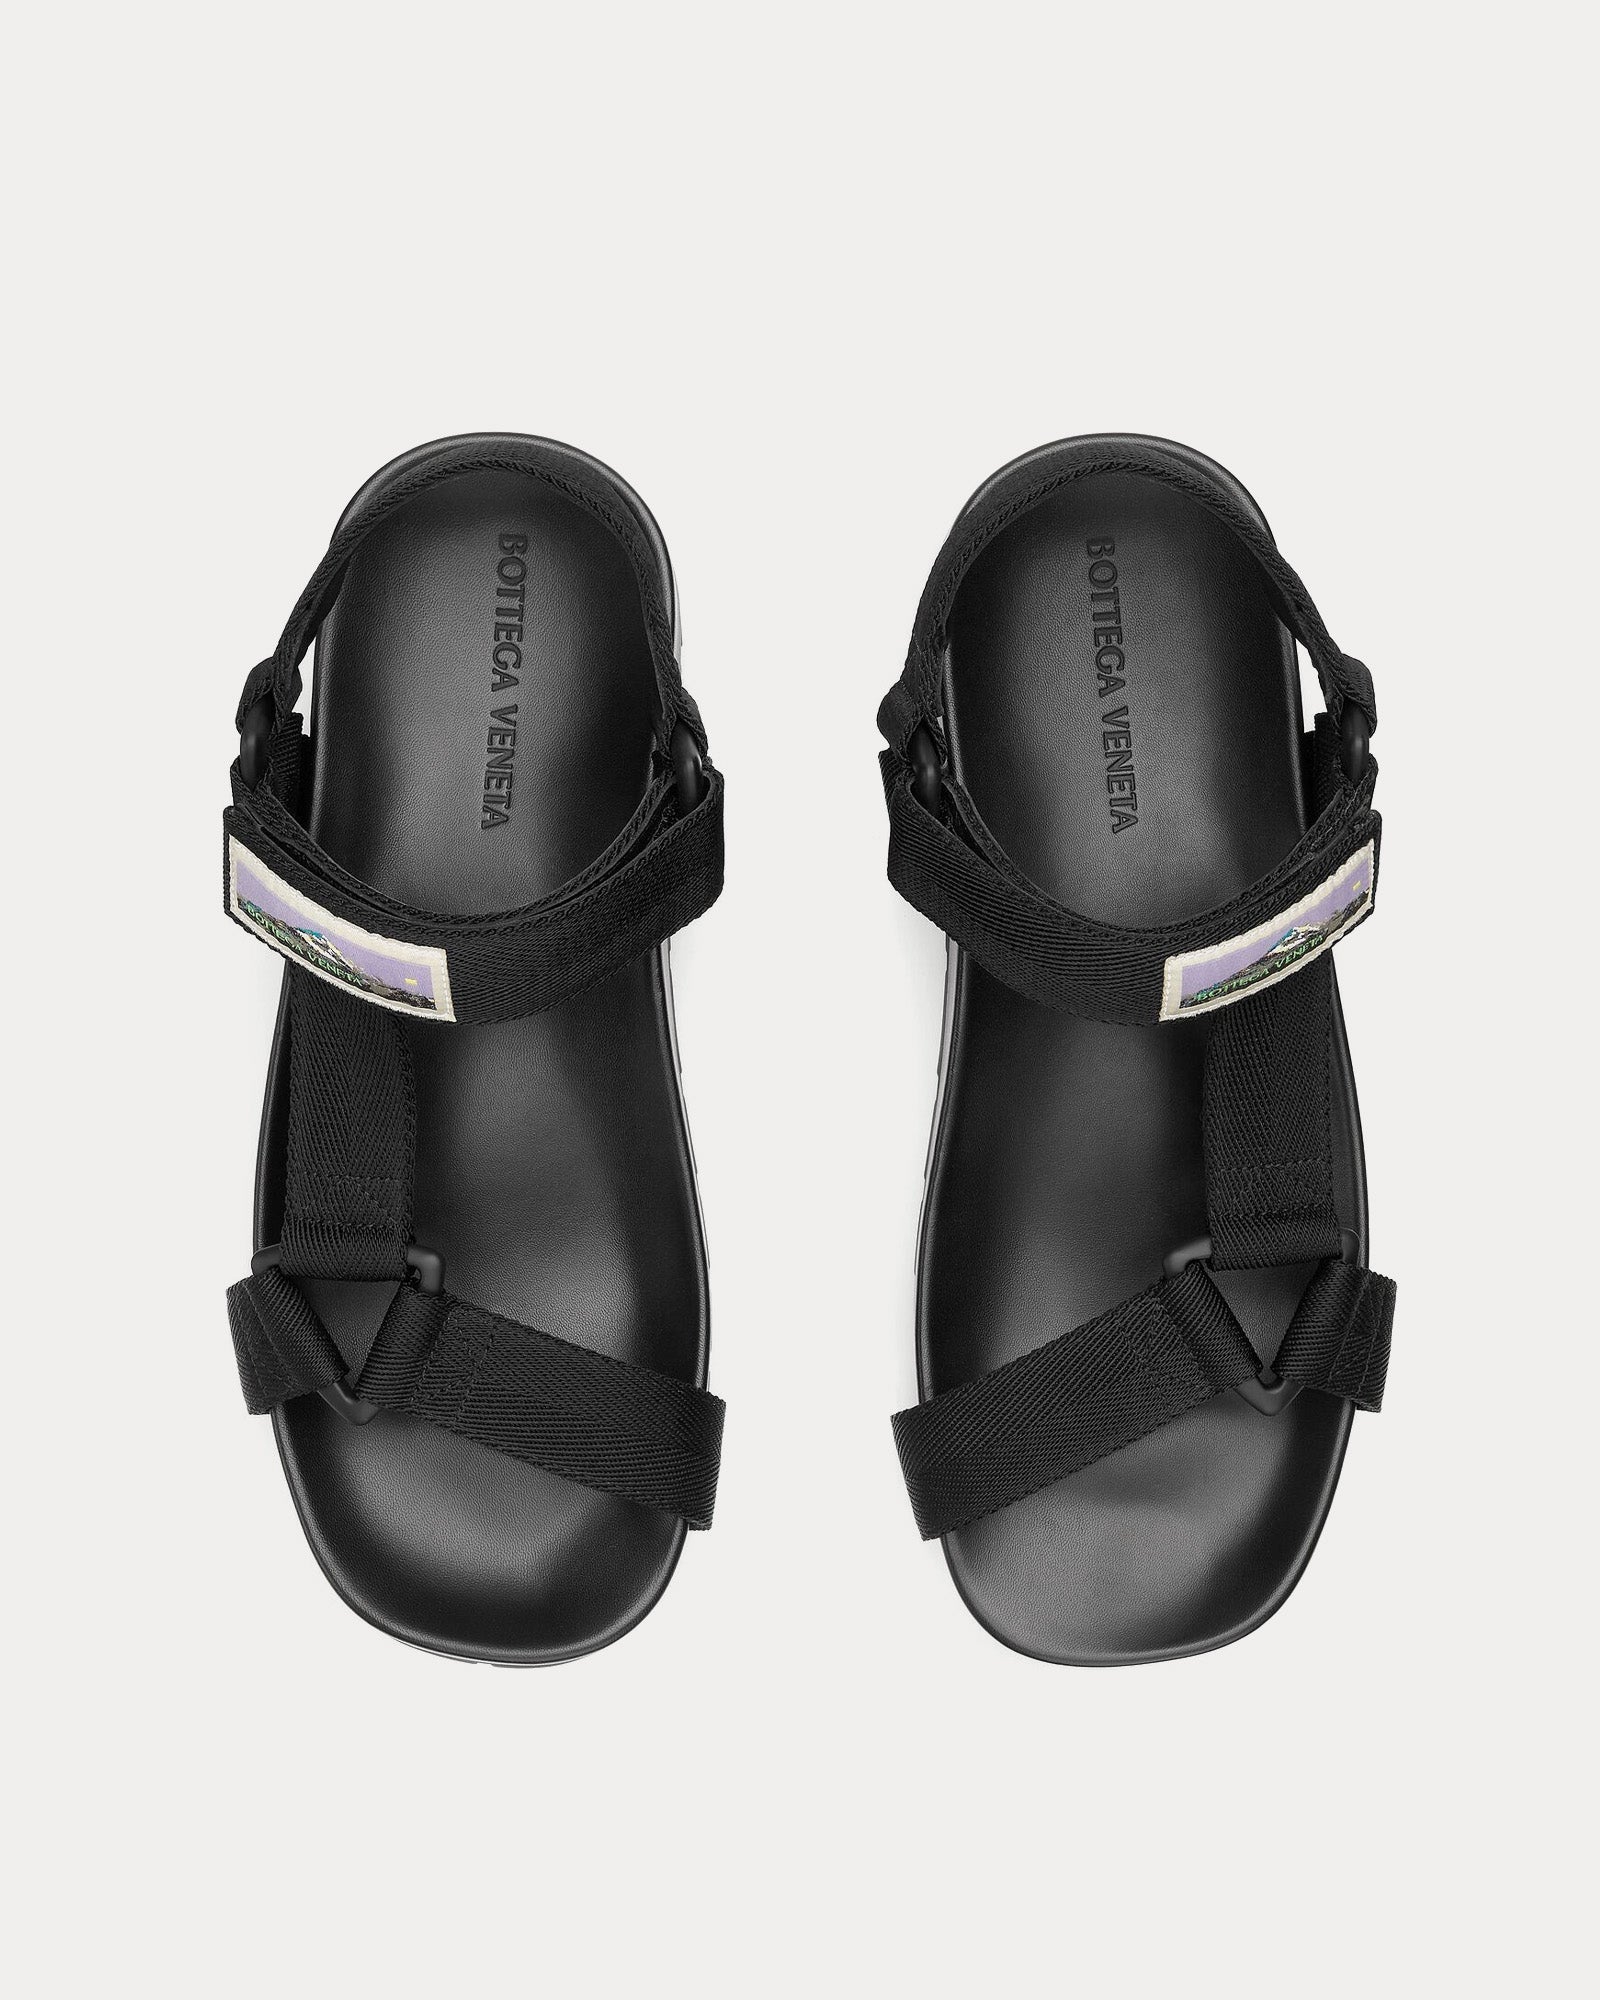 Bottega Veneta - Trip Technical Nylon Black Sandals